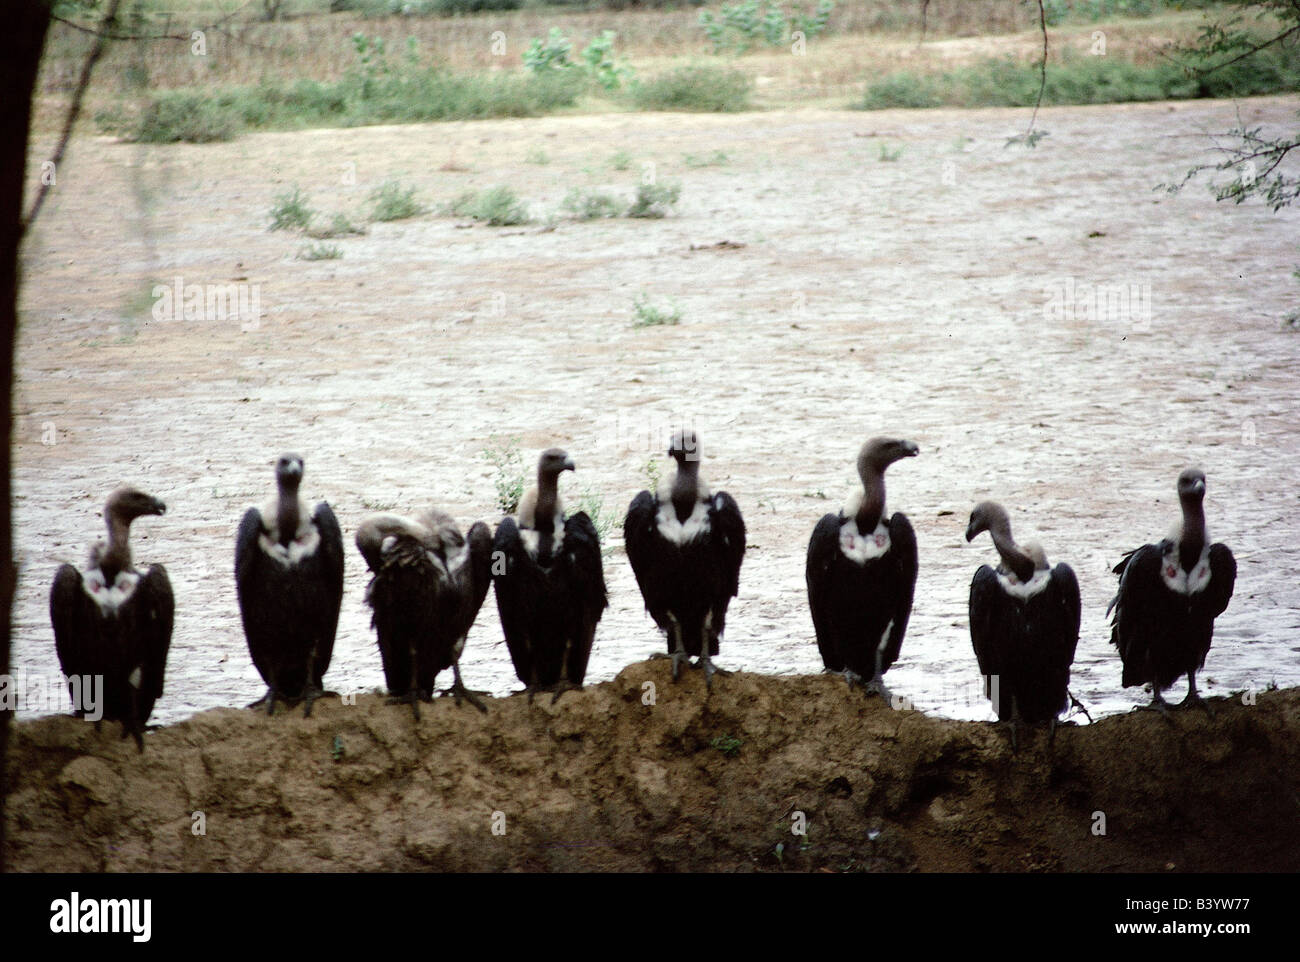 Zoologia / animali, uccelli / uccelli, avvoltoio grifone (Gyps fulvus), alcuni avvoltoi in banchina, Rajasthan, India, distribuzione: Foto Stock